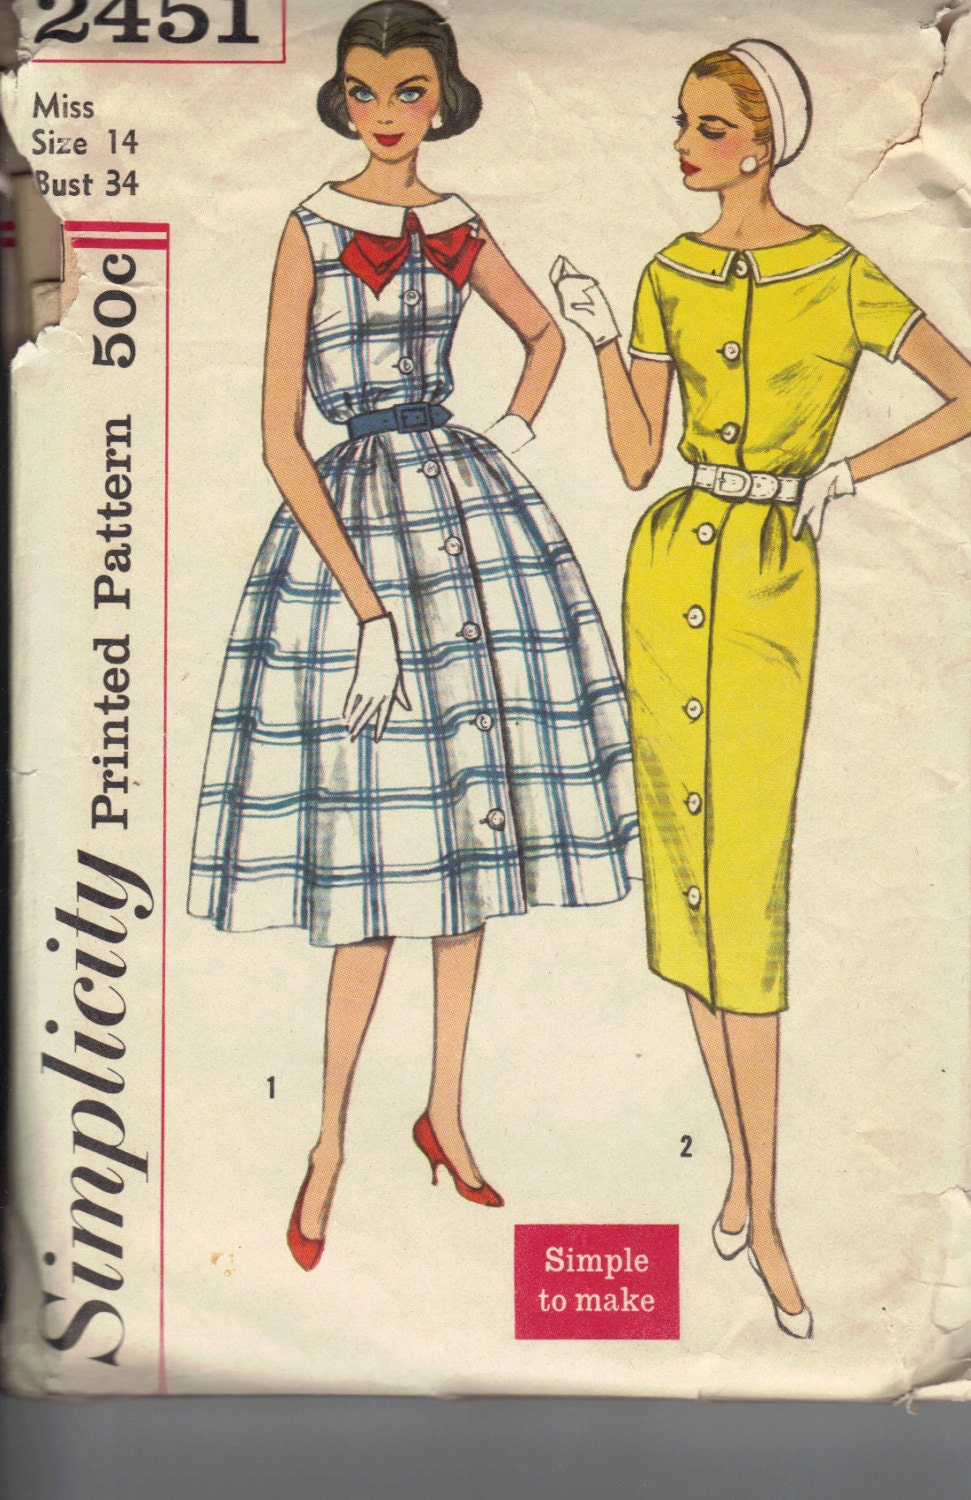 Vintage 1960's Women's Dress Pattern, Simplicity 2451, Size 14